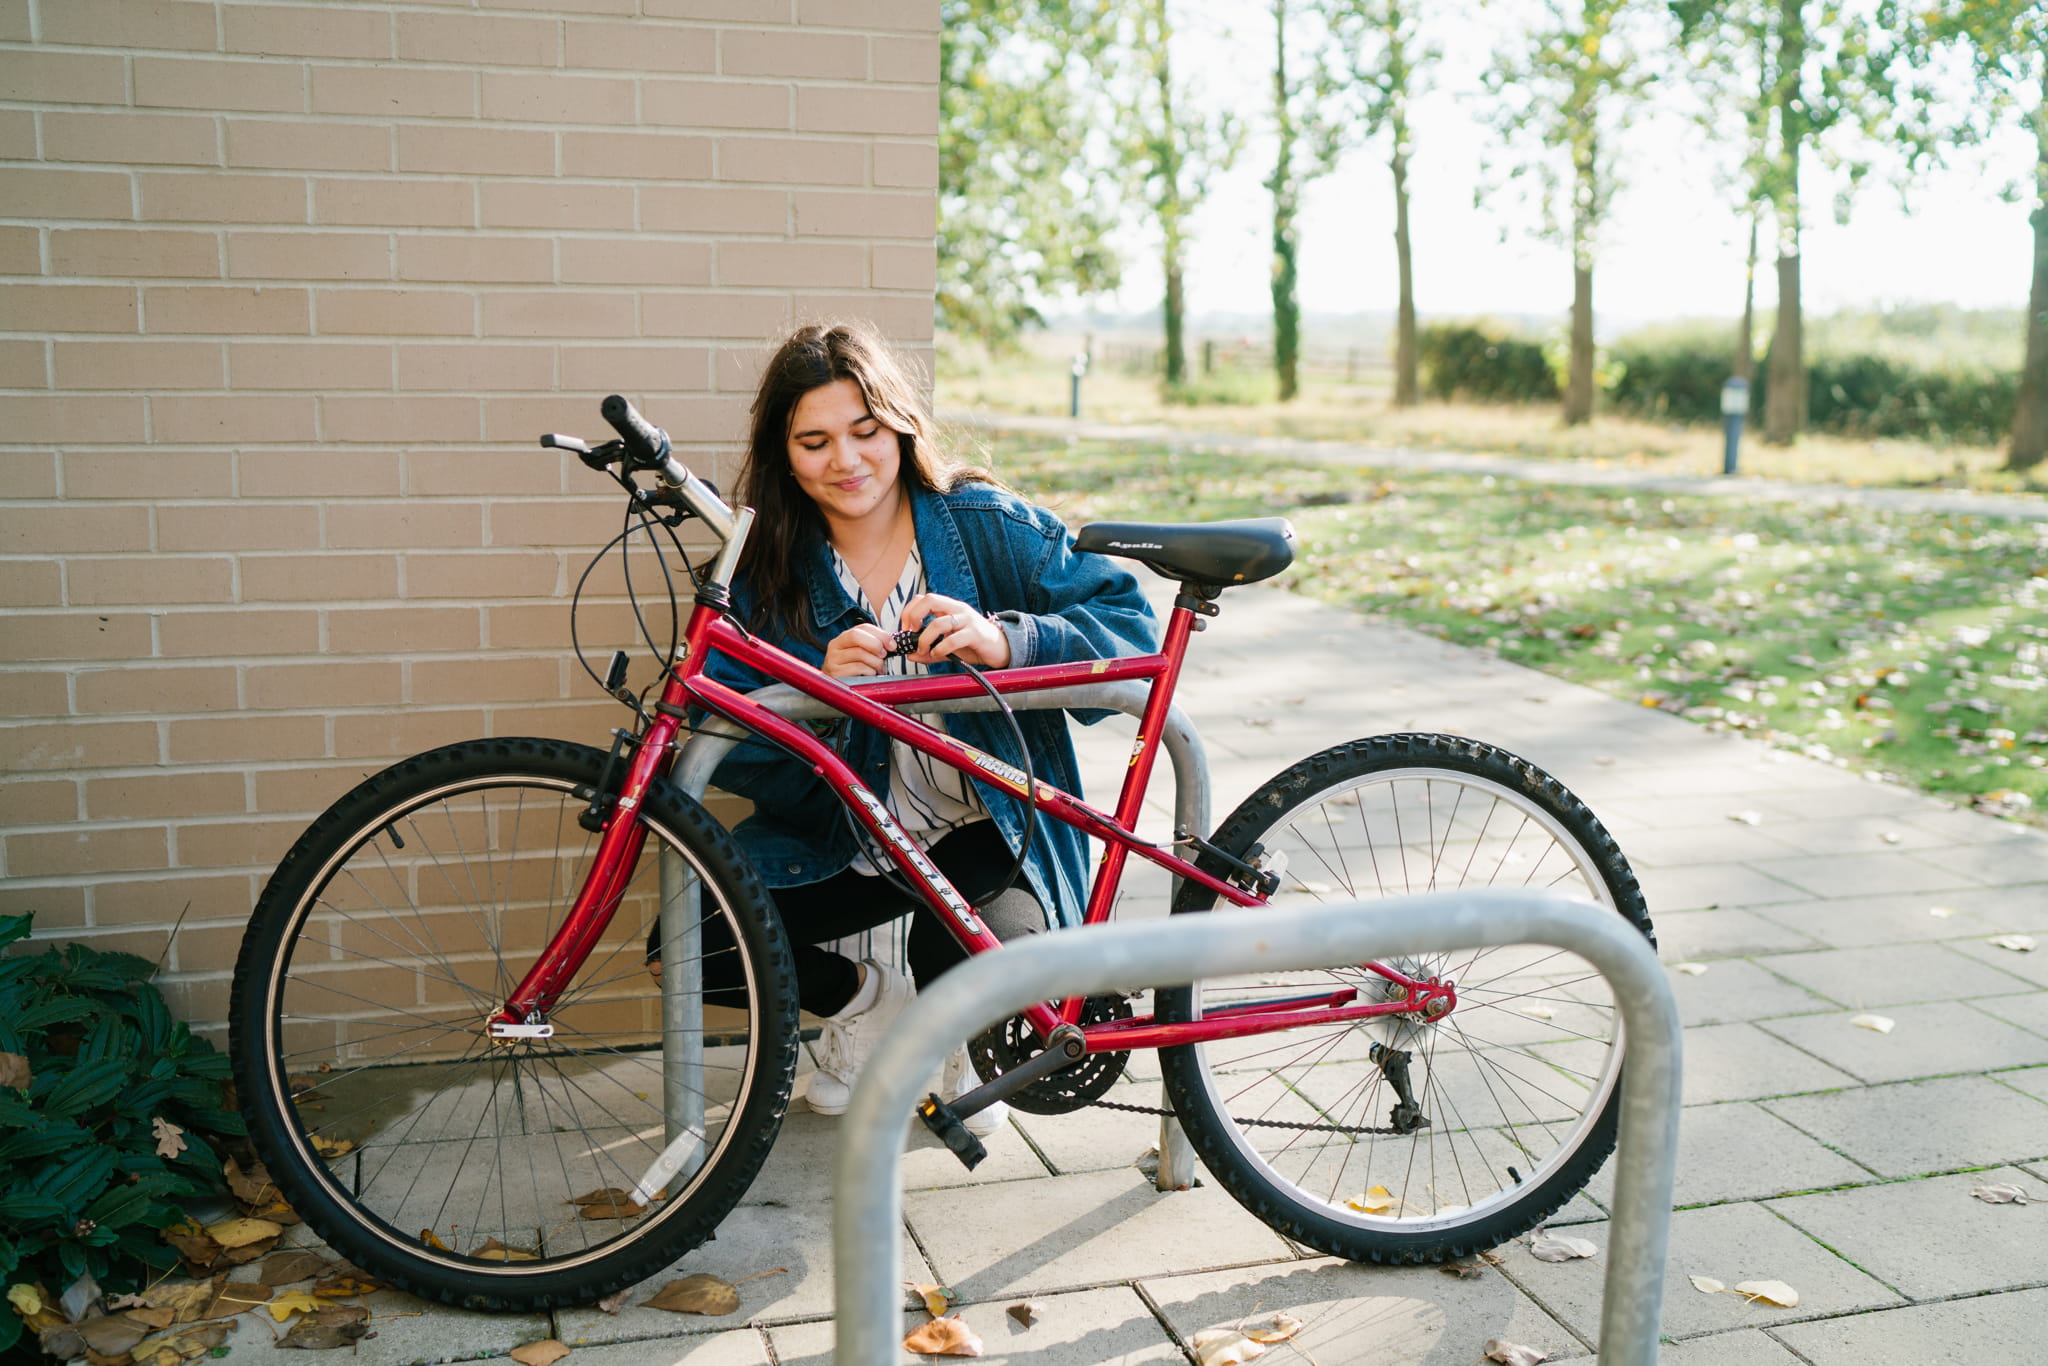 Bike storage is available around campus